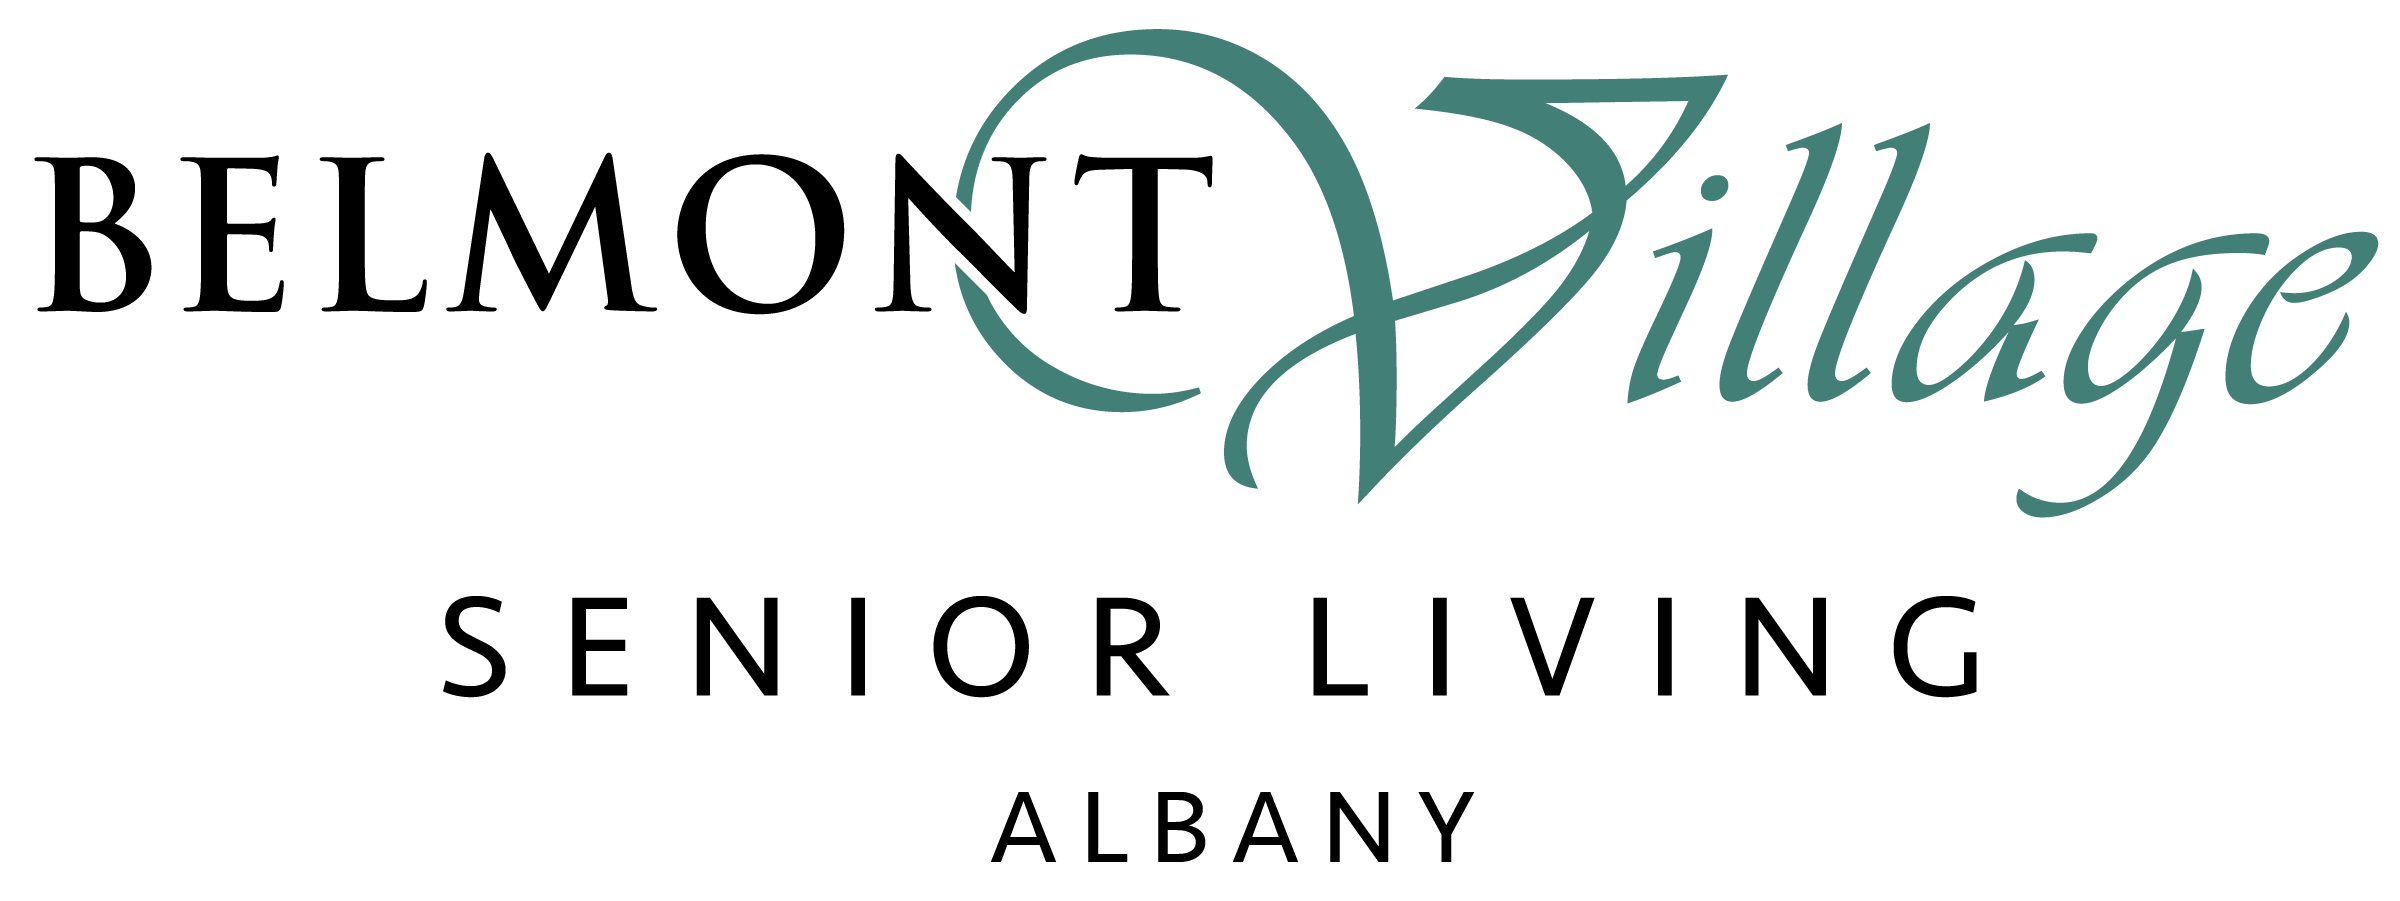 Belmont Village Logo lg.png